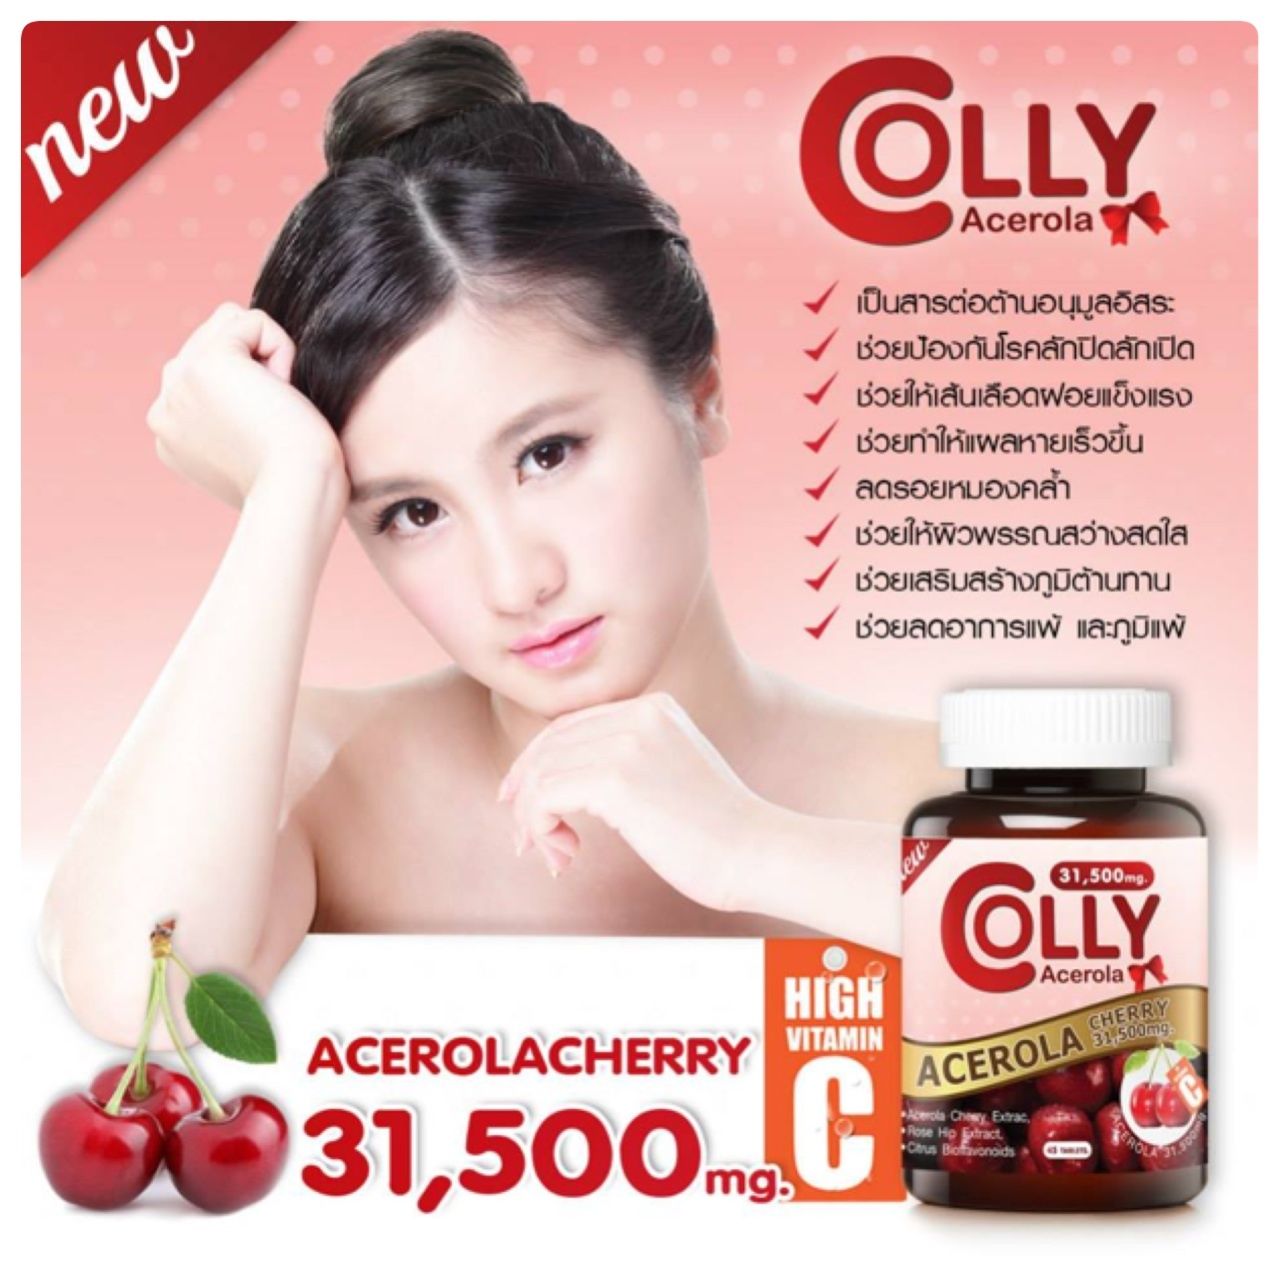 Colly Acerola Cherry3